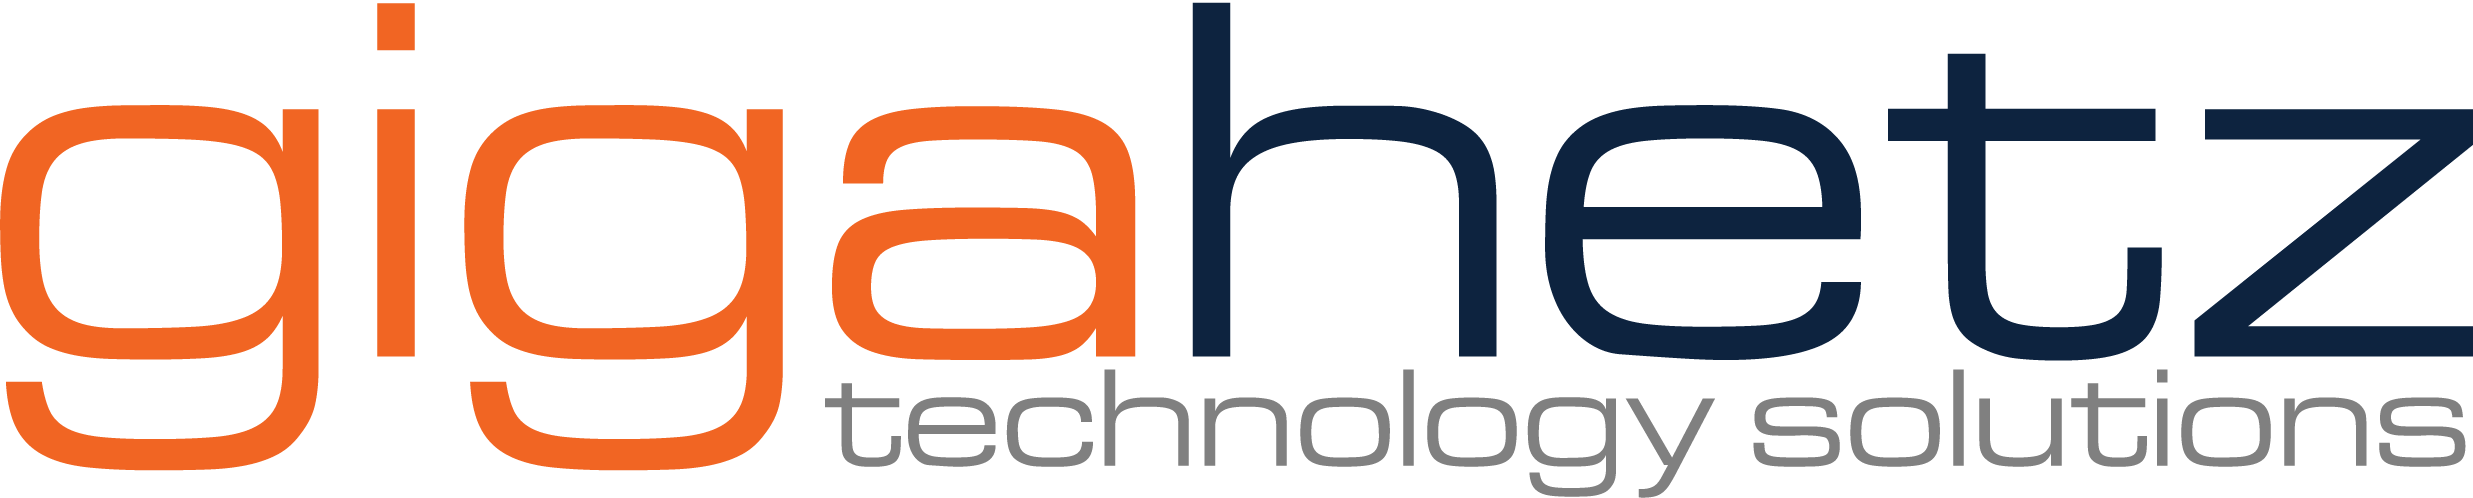 GigaHetz Technology Solutions, LLC.